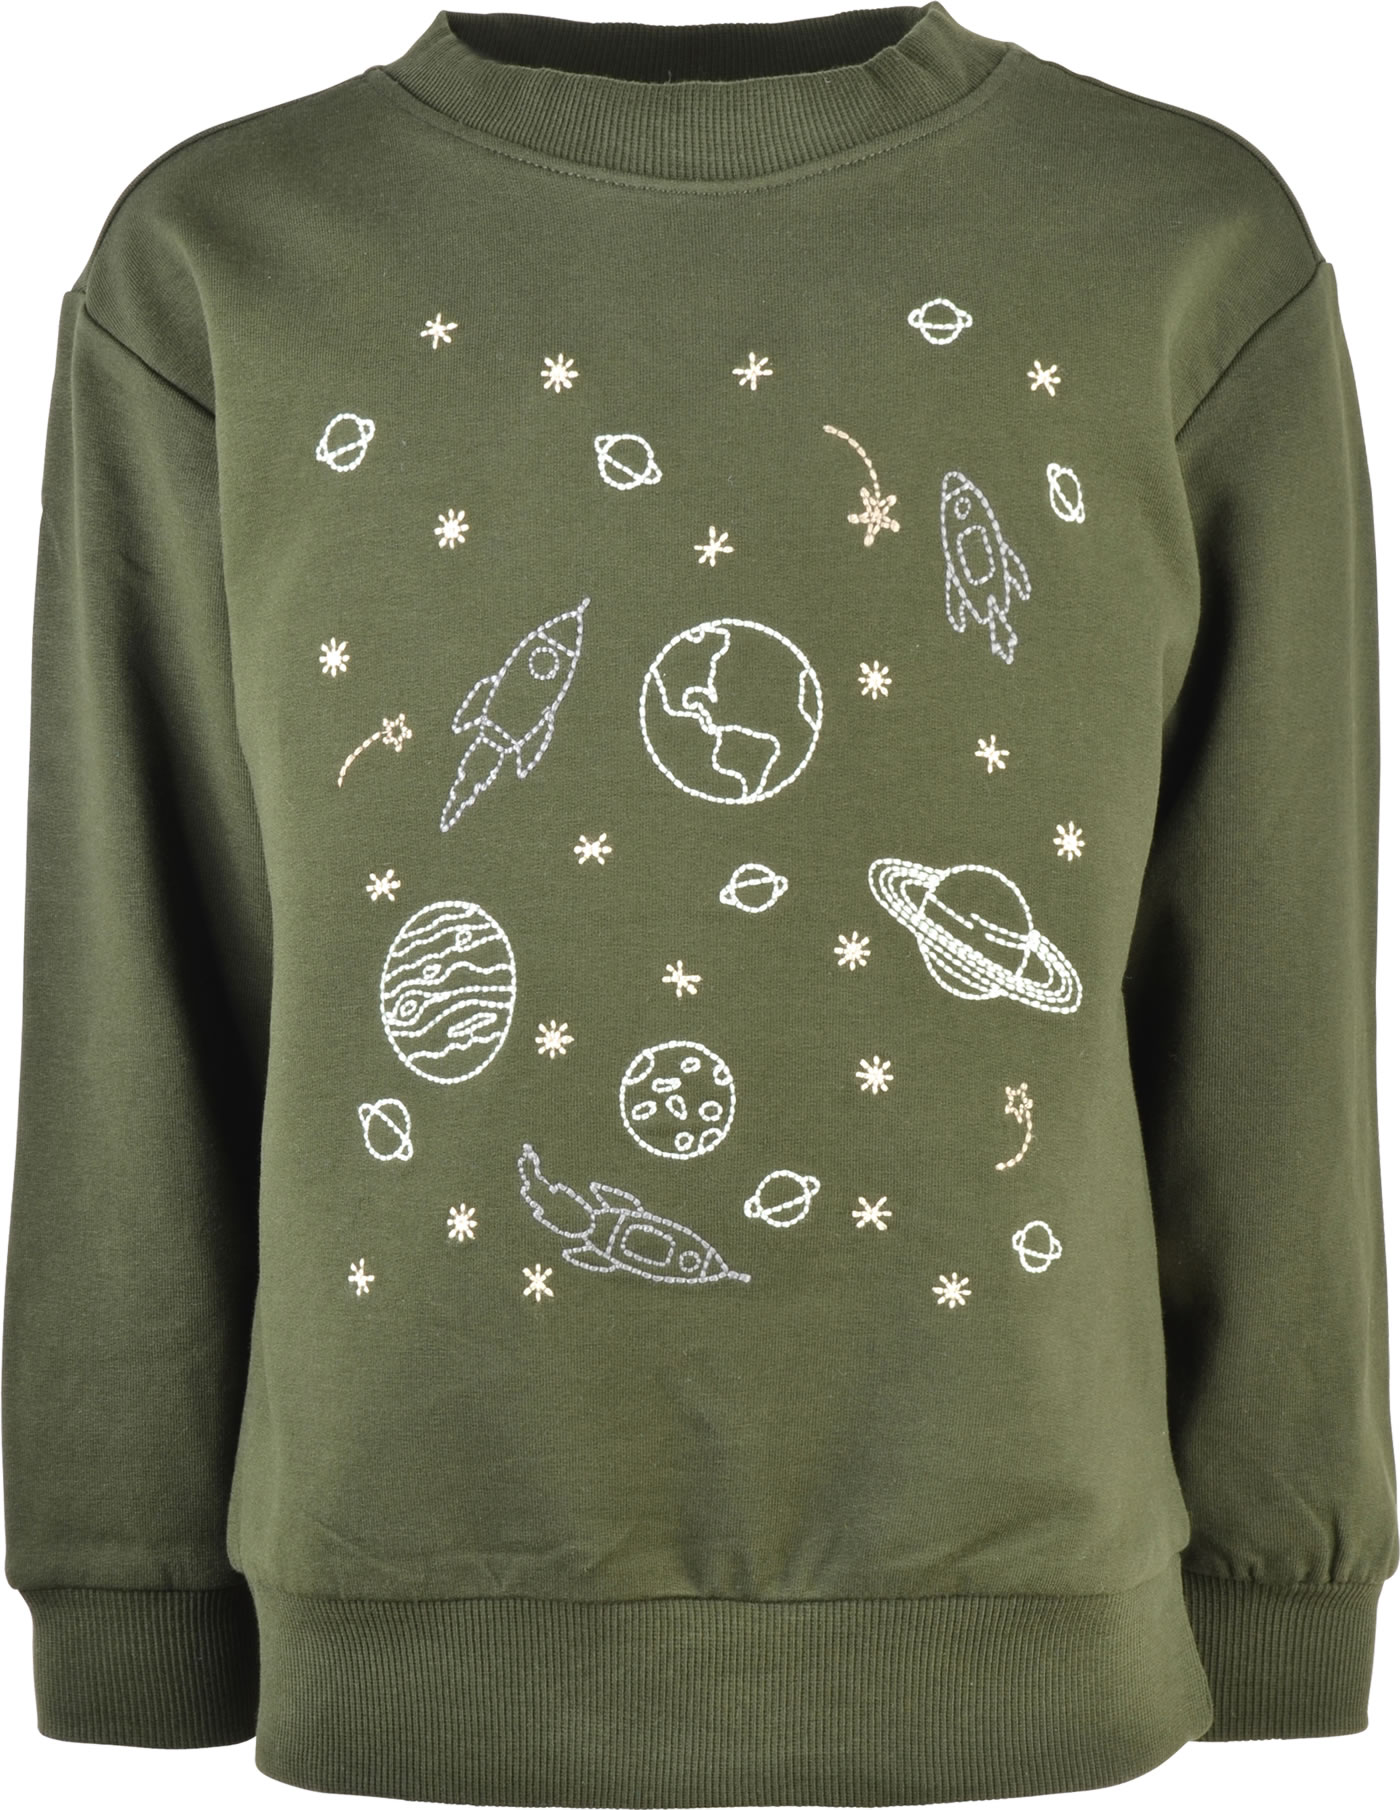 Sweatshirt Kids SPACE deep forest Wheat